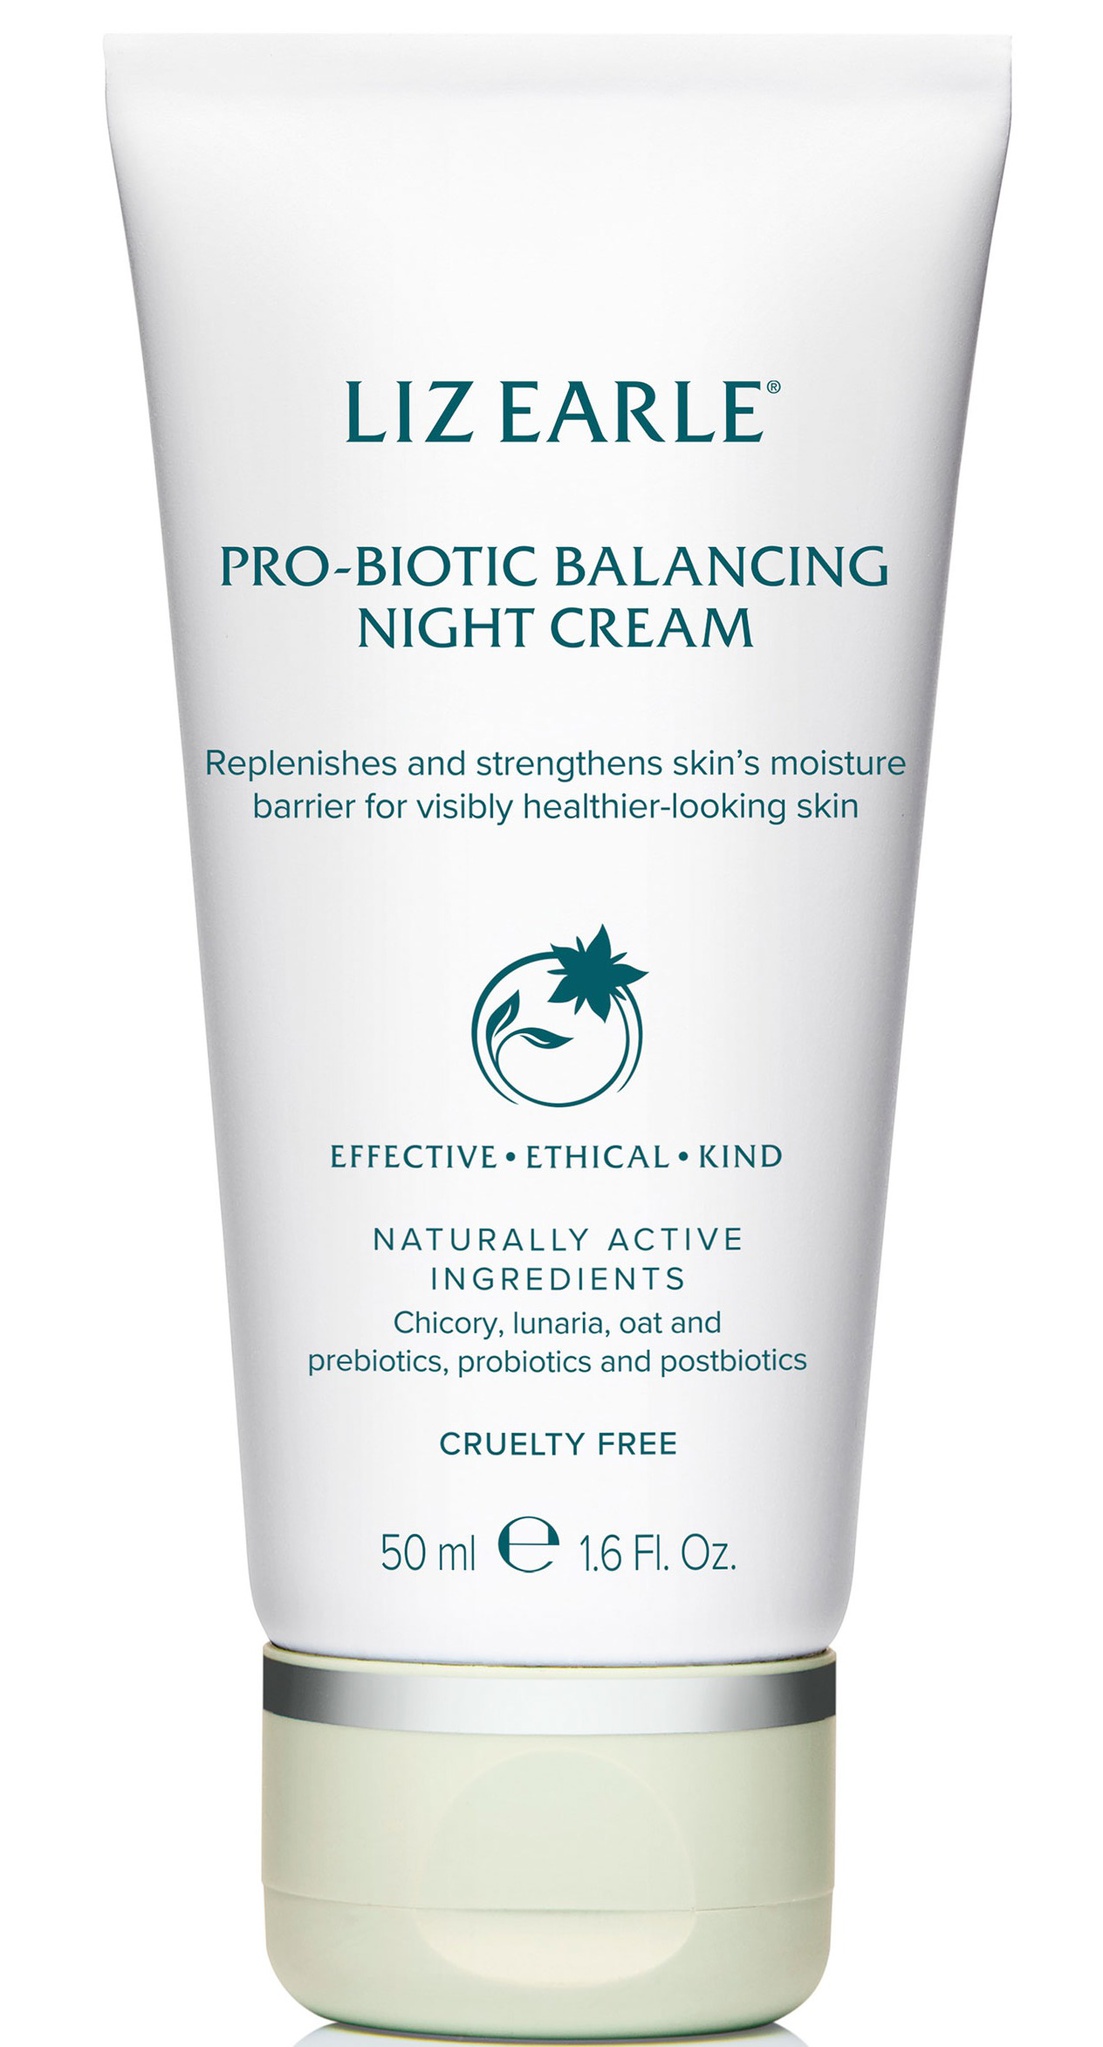 Liz Earle Pro-biotic Balancing Night Cream